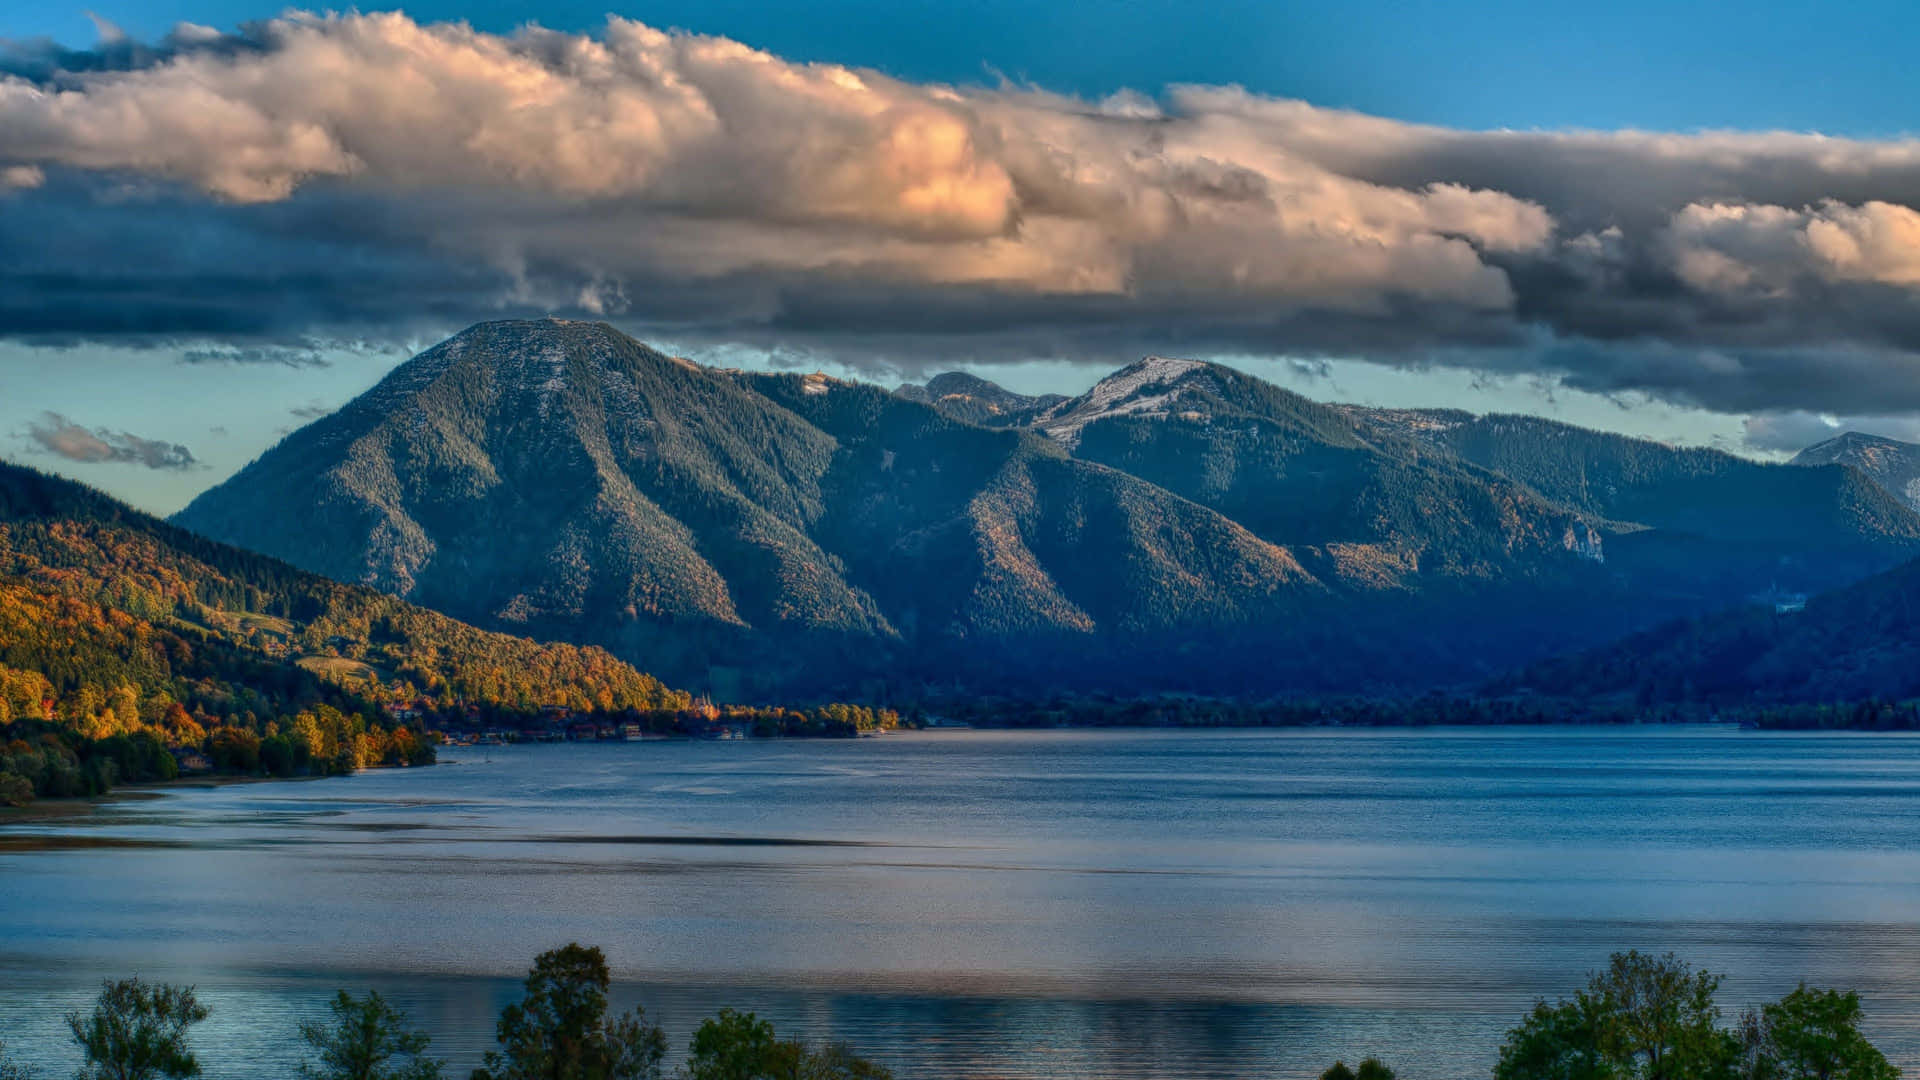 Mountain Range Touching The Clouds 4K Ultra HD Landscape Wallpaper